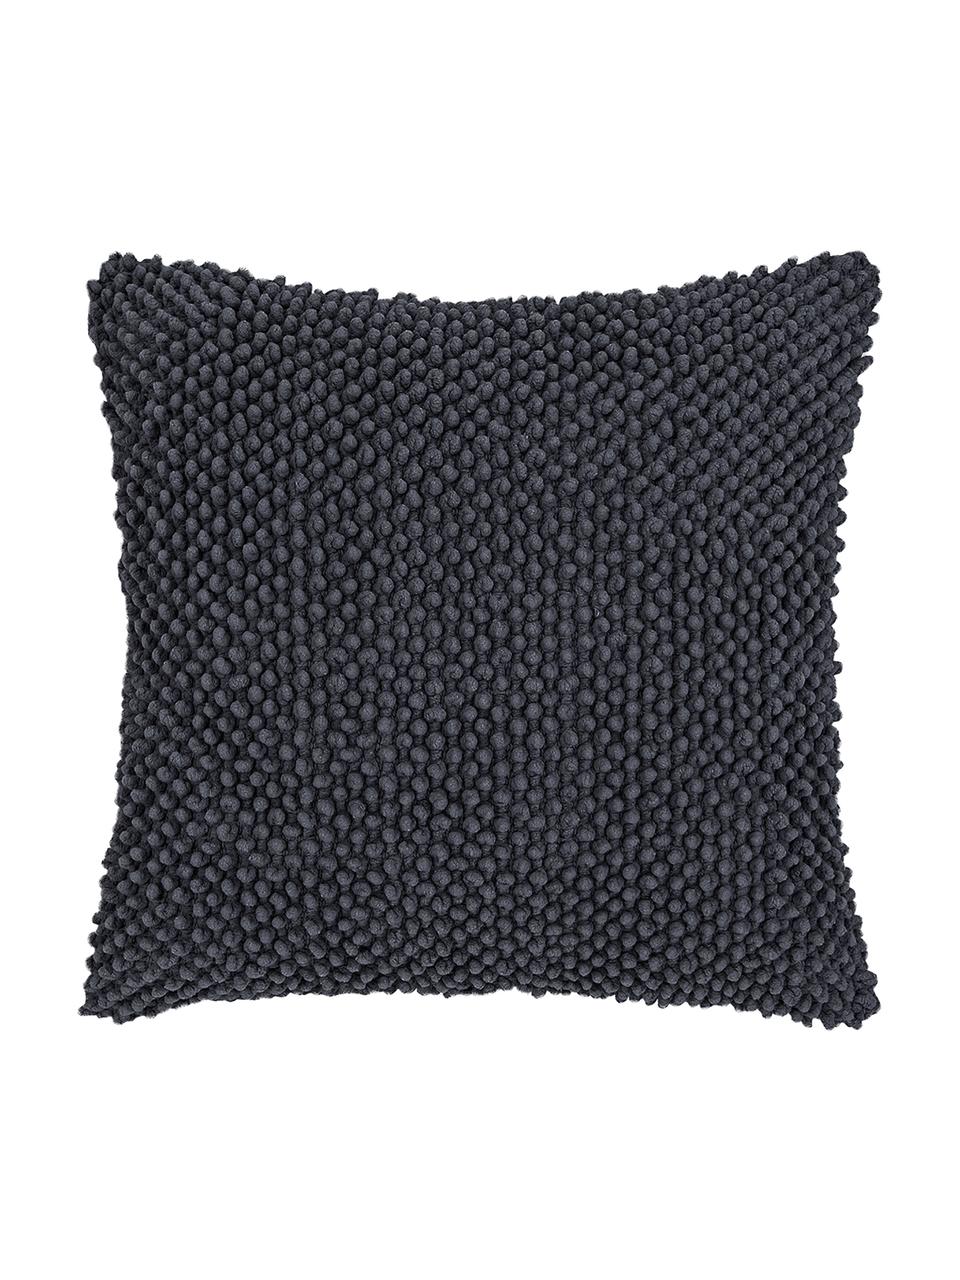 Kissenhülle Indi mit strukturierter Oberfläche in Dunkelgrau, 100% Baumwolle, Dunkelgrau, B 45 x L 45 cm